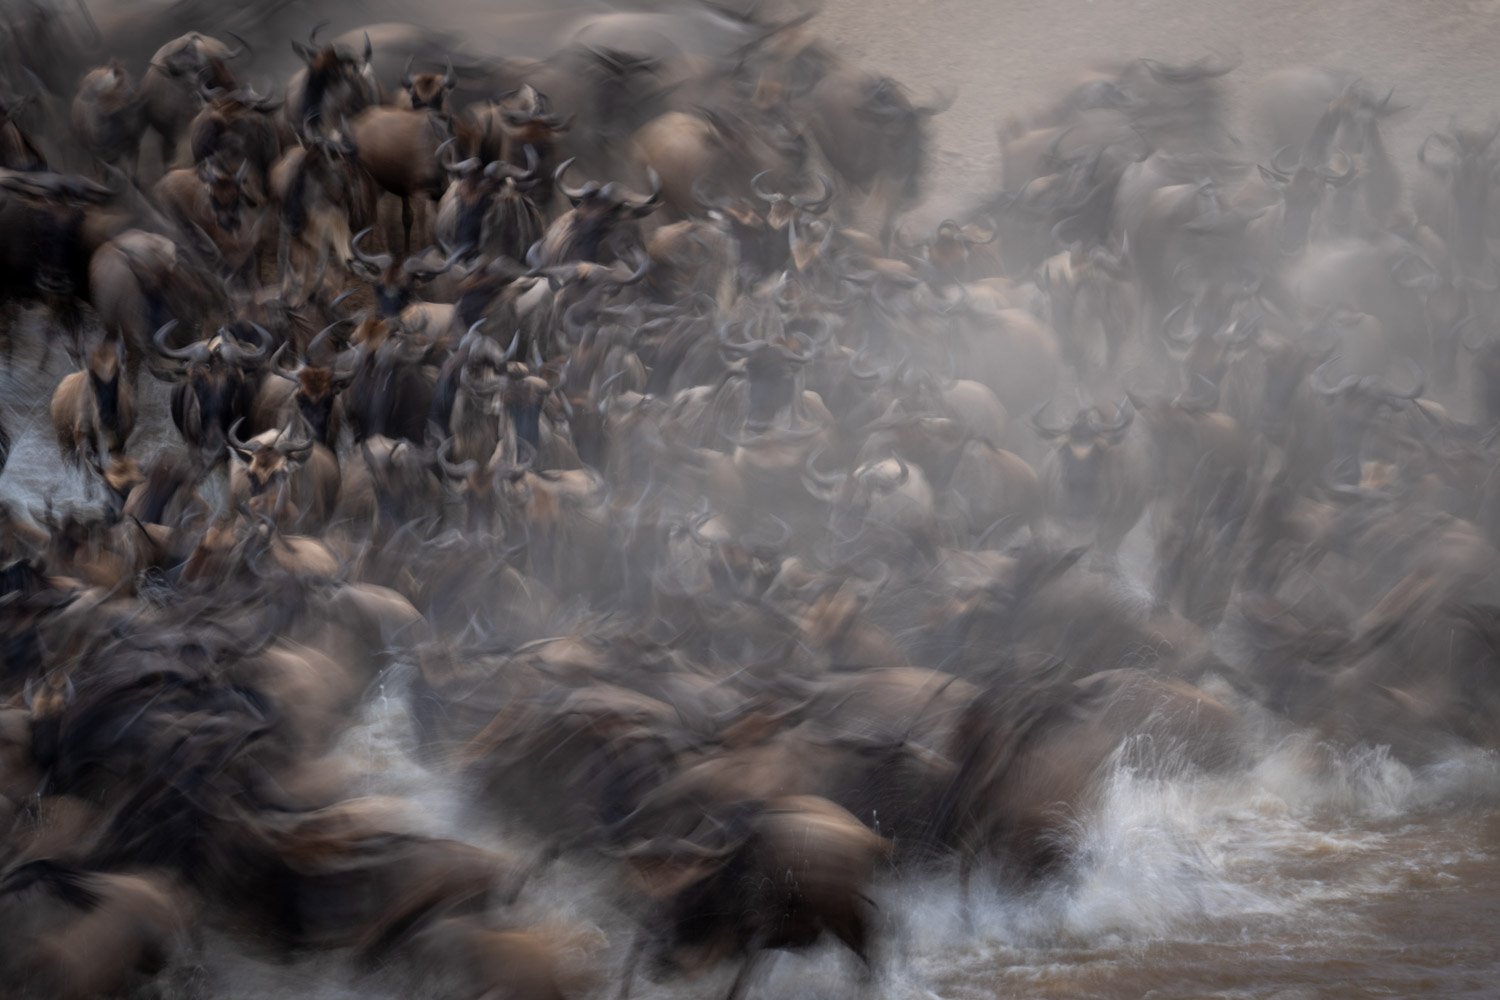 Slow pan of blue wildebeest in river